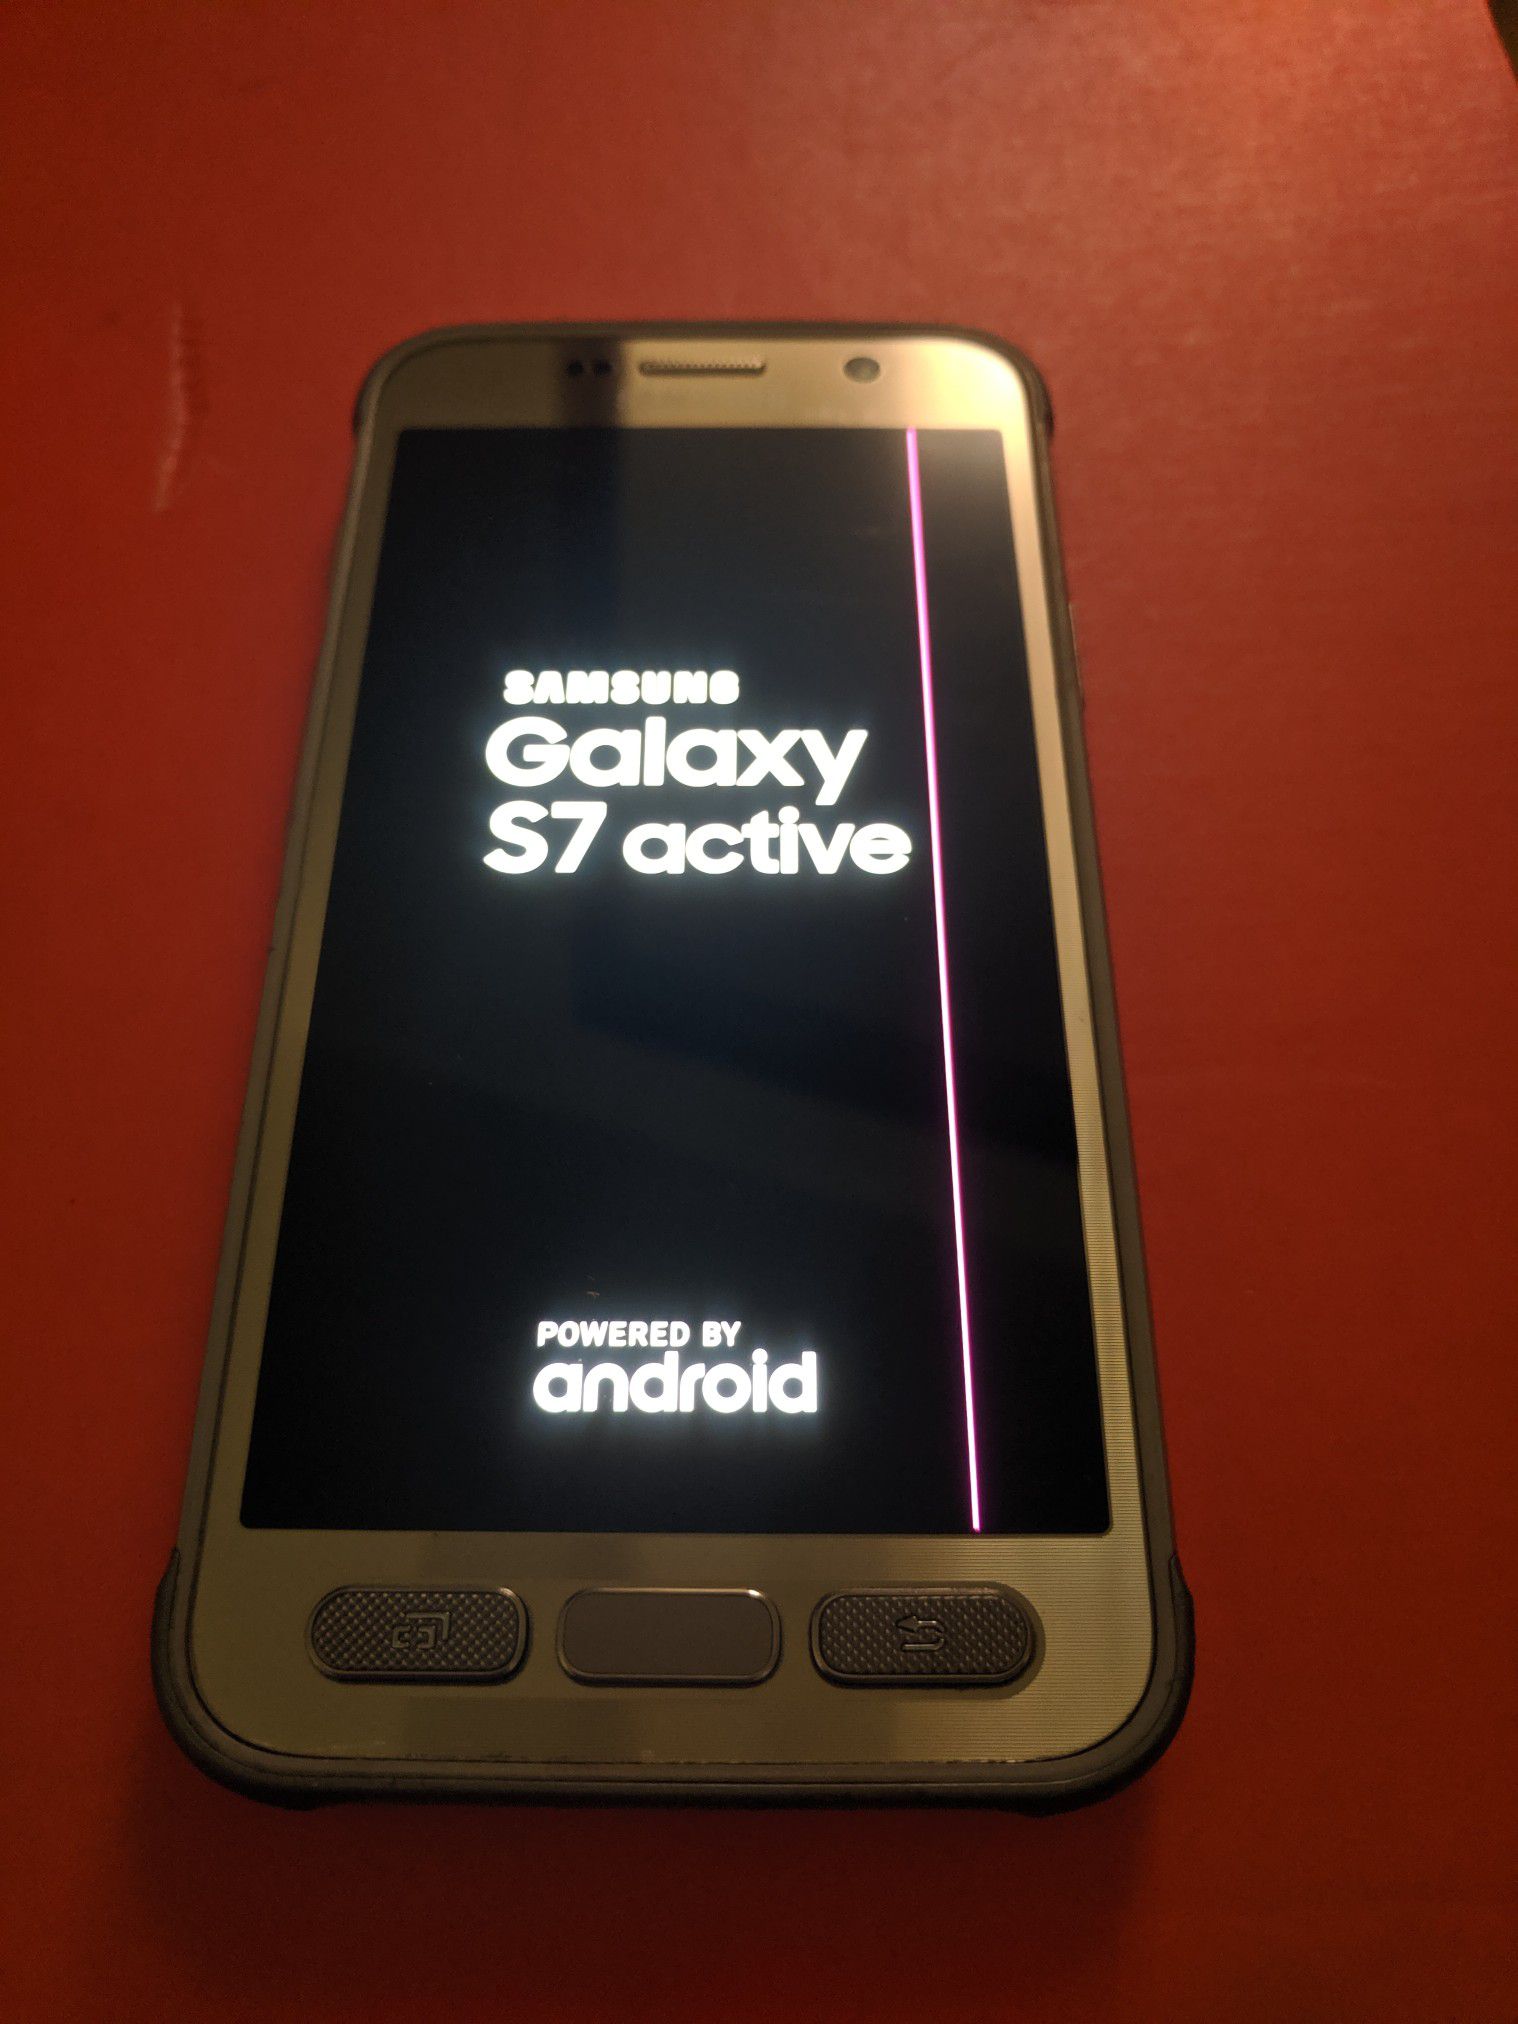 Samsung Galaxy S7 active unlocked